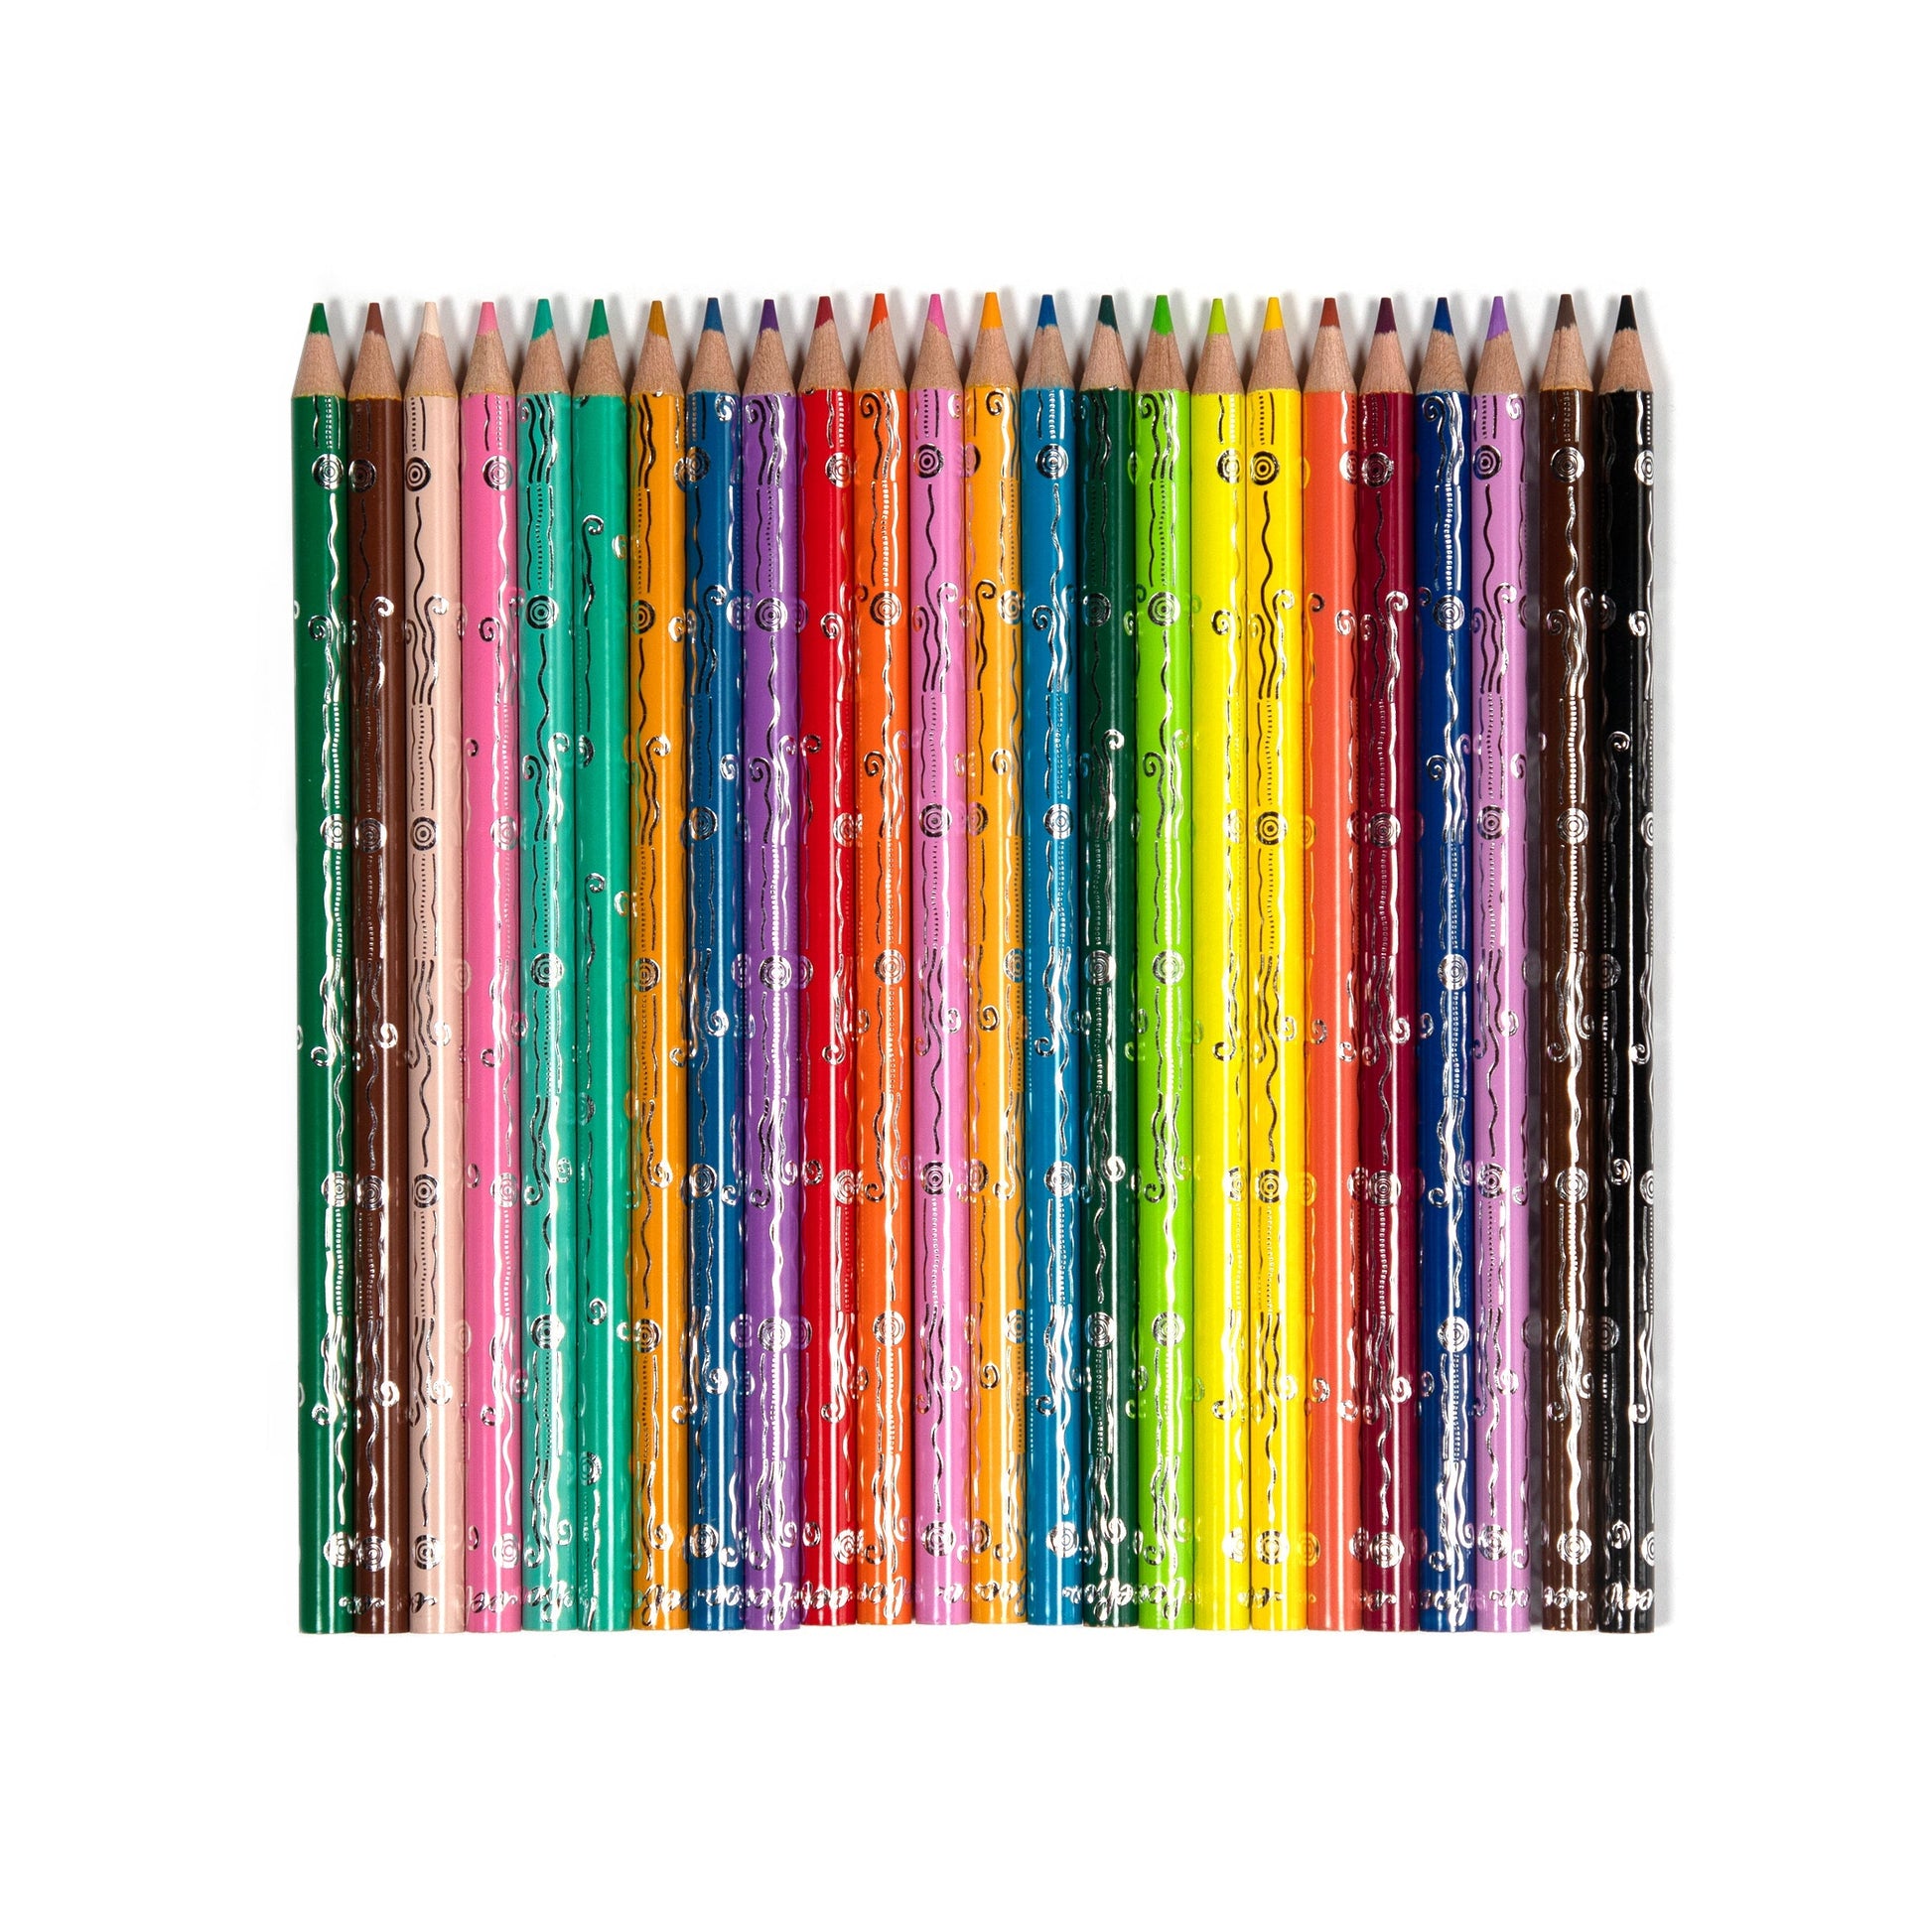 Bountiful Garden 24 Color Pencils Sketchbook eeBoo Gift for Adults 14+